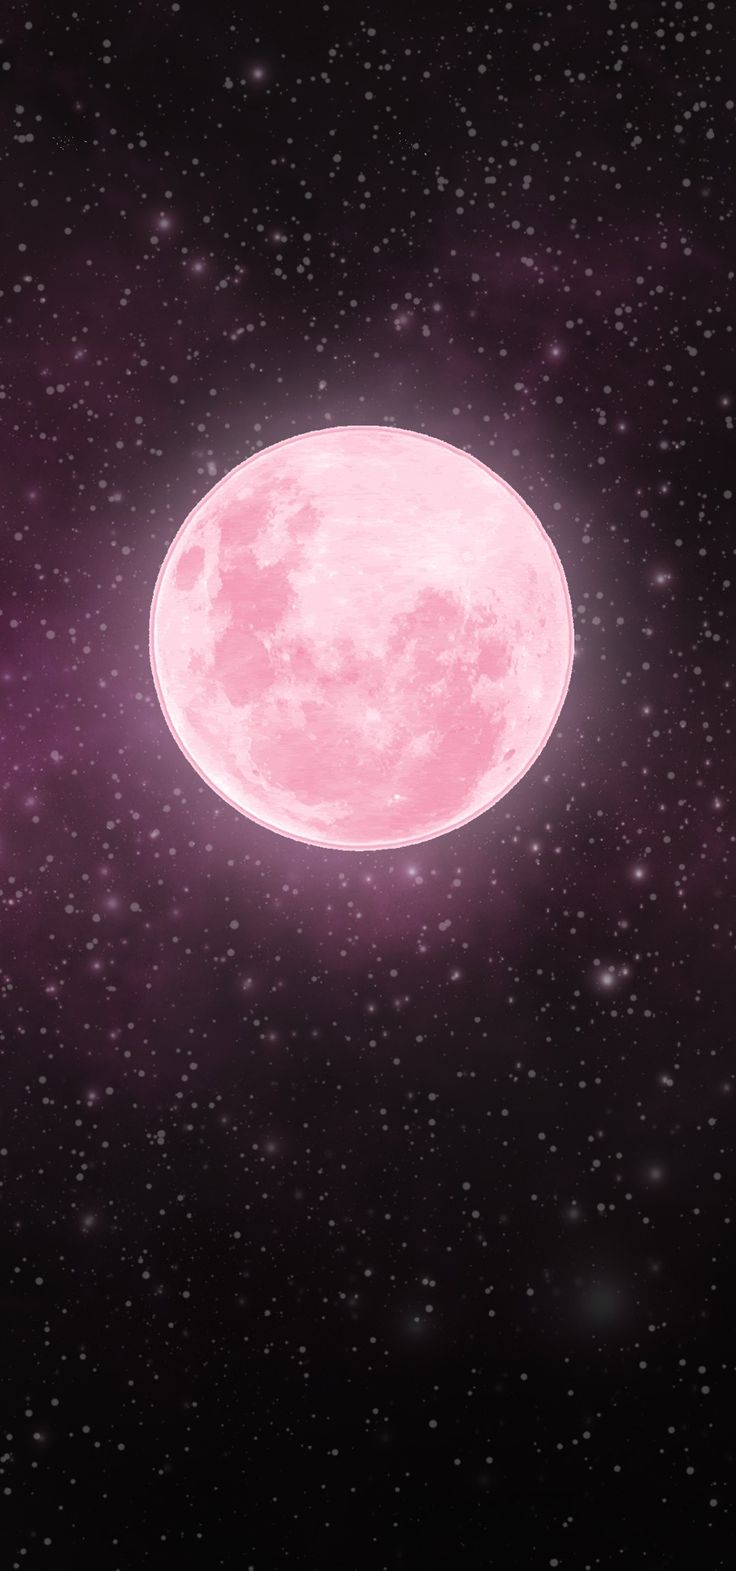 Pink moon. Pink moon wallpaper, Moon and stars wallpaper, Galaxy wallpaper iphone